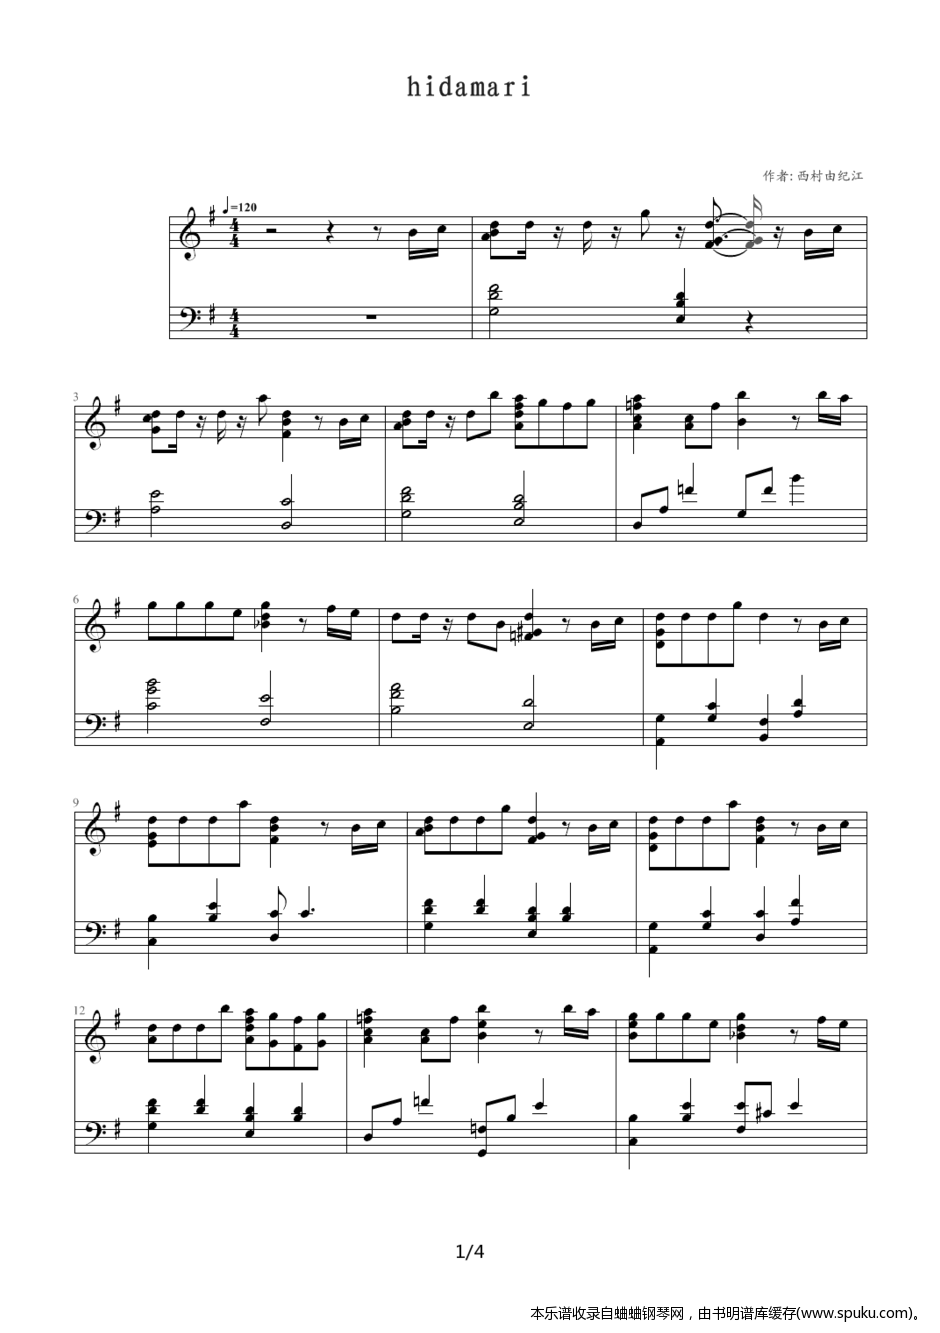 hidamari1-钢琴谱-曲谱